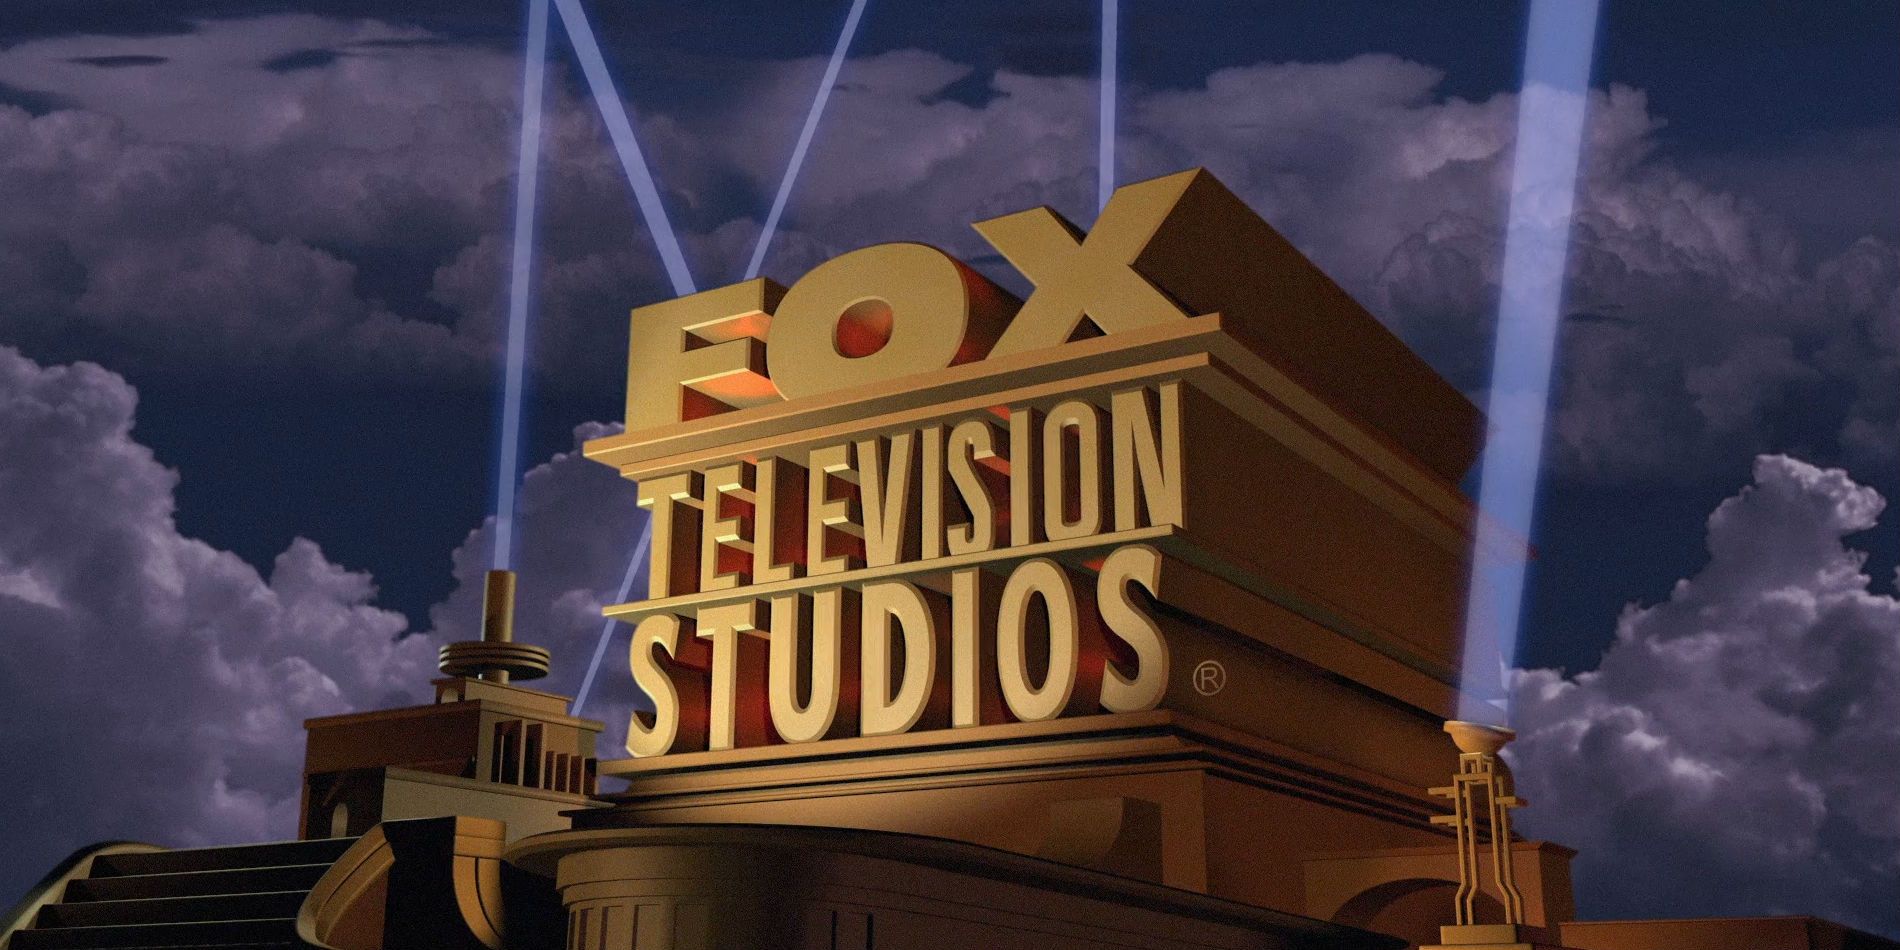 50th century fox television logo